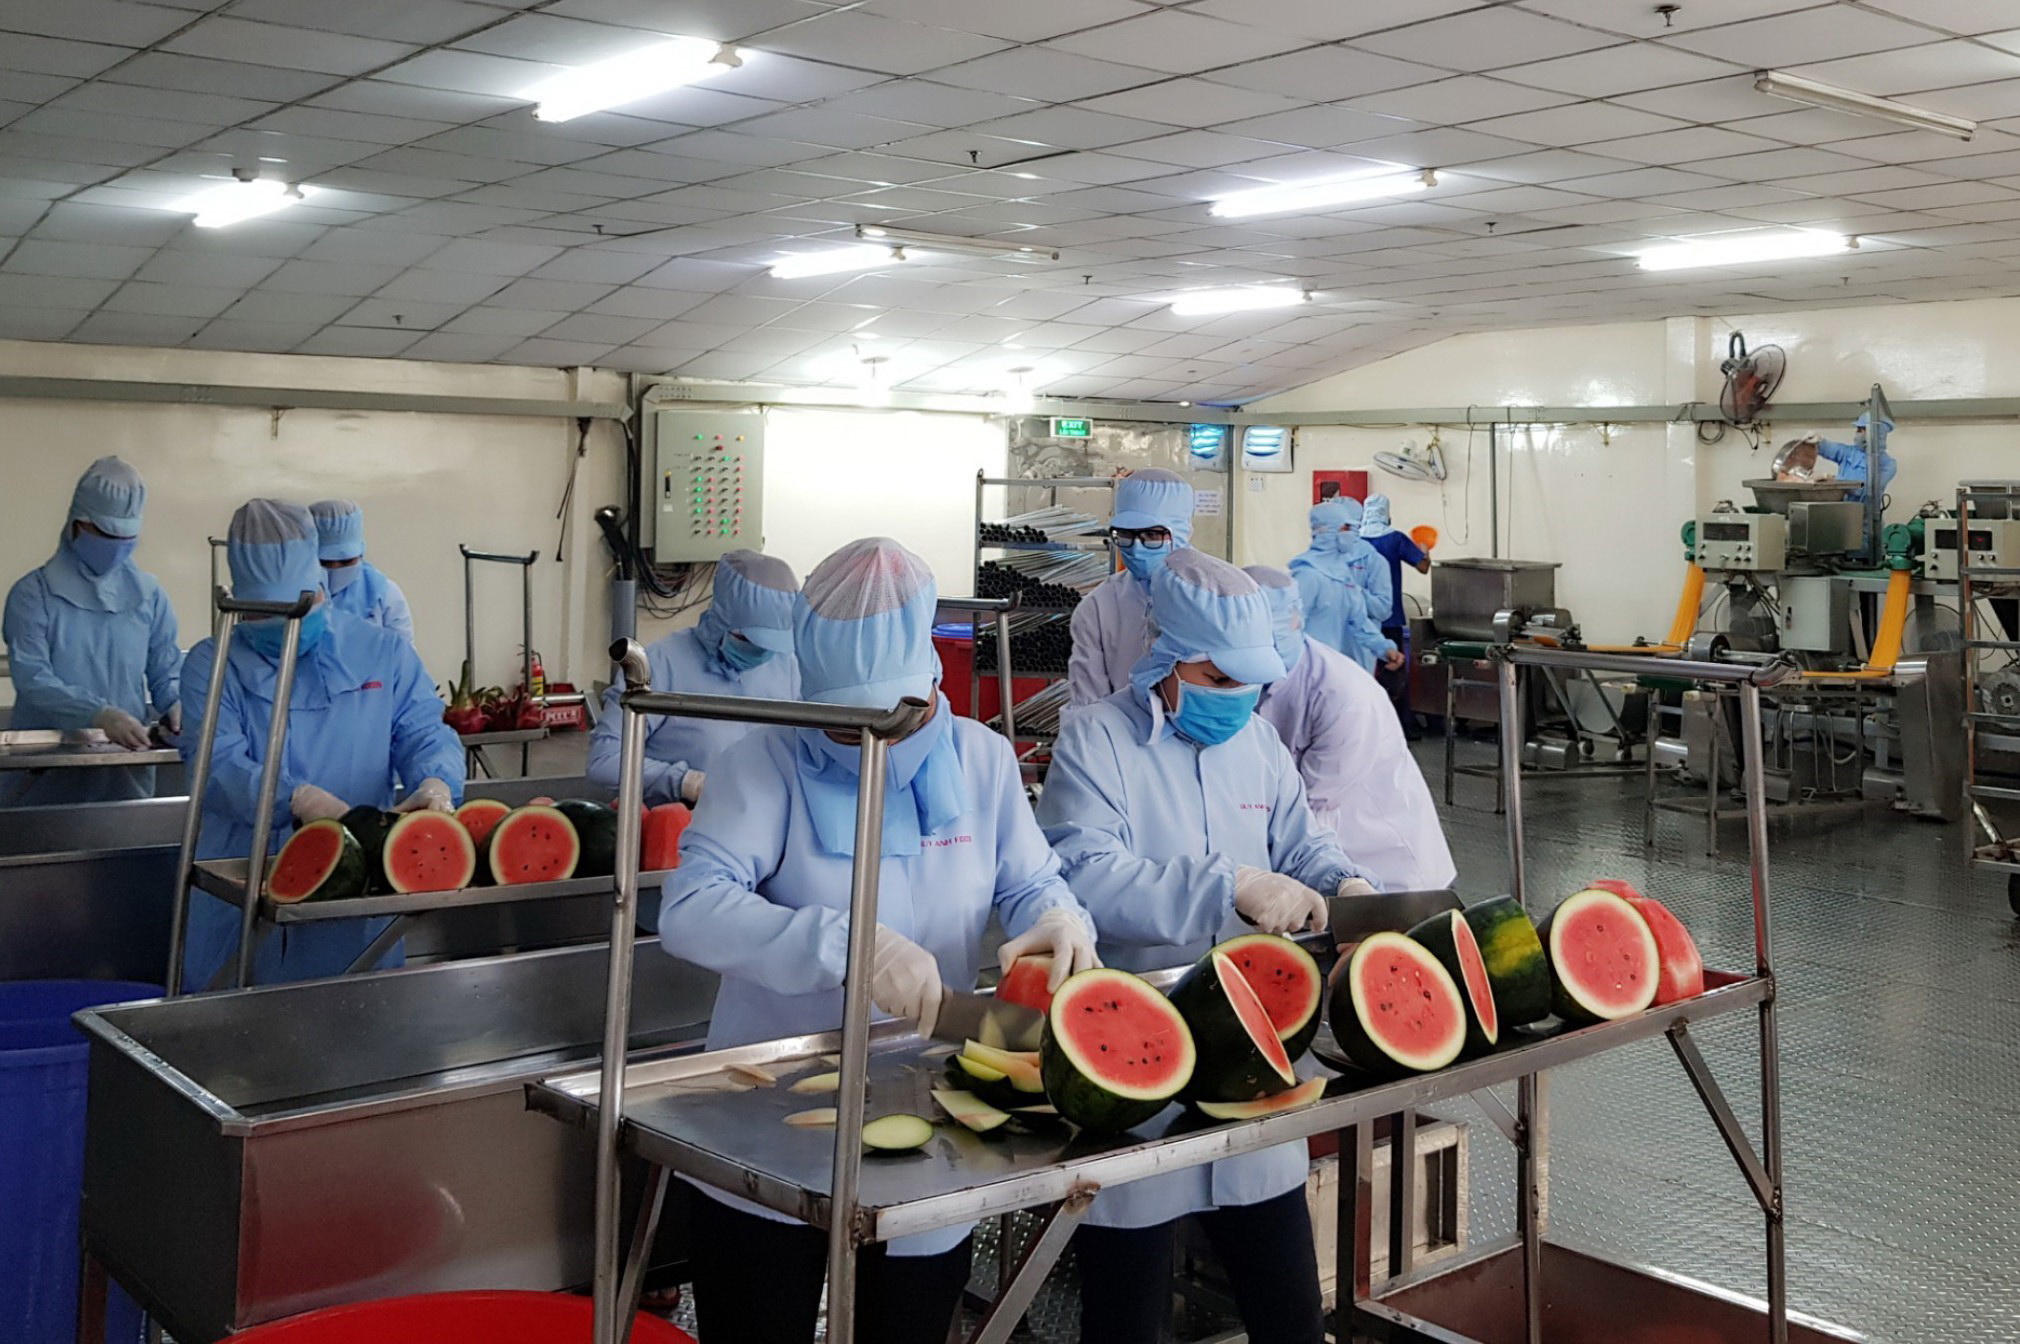 Производство вермишеля на соке арбуза в компании “Зуи-ань”. (Фото: ВИА)